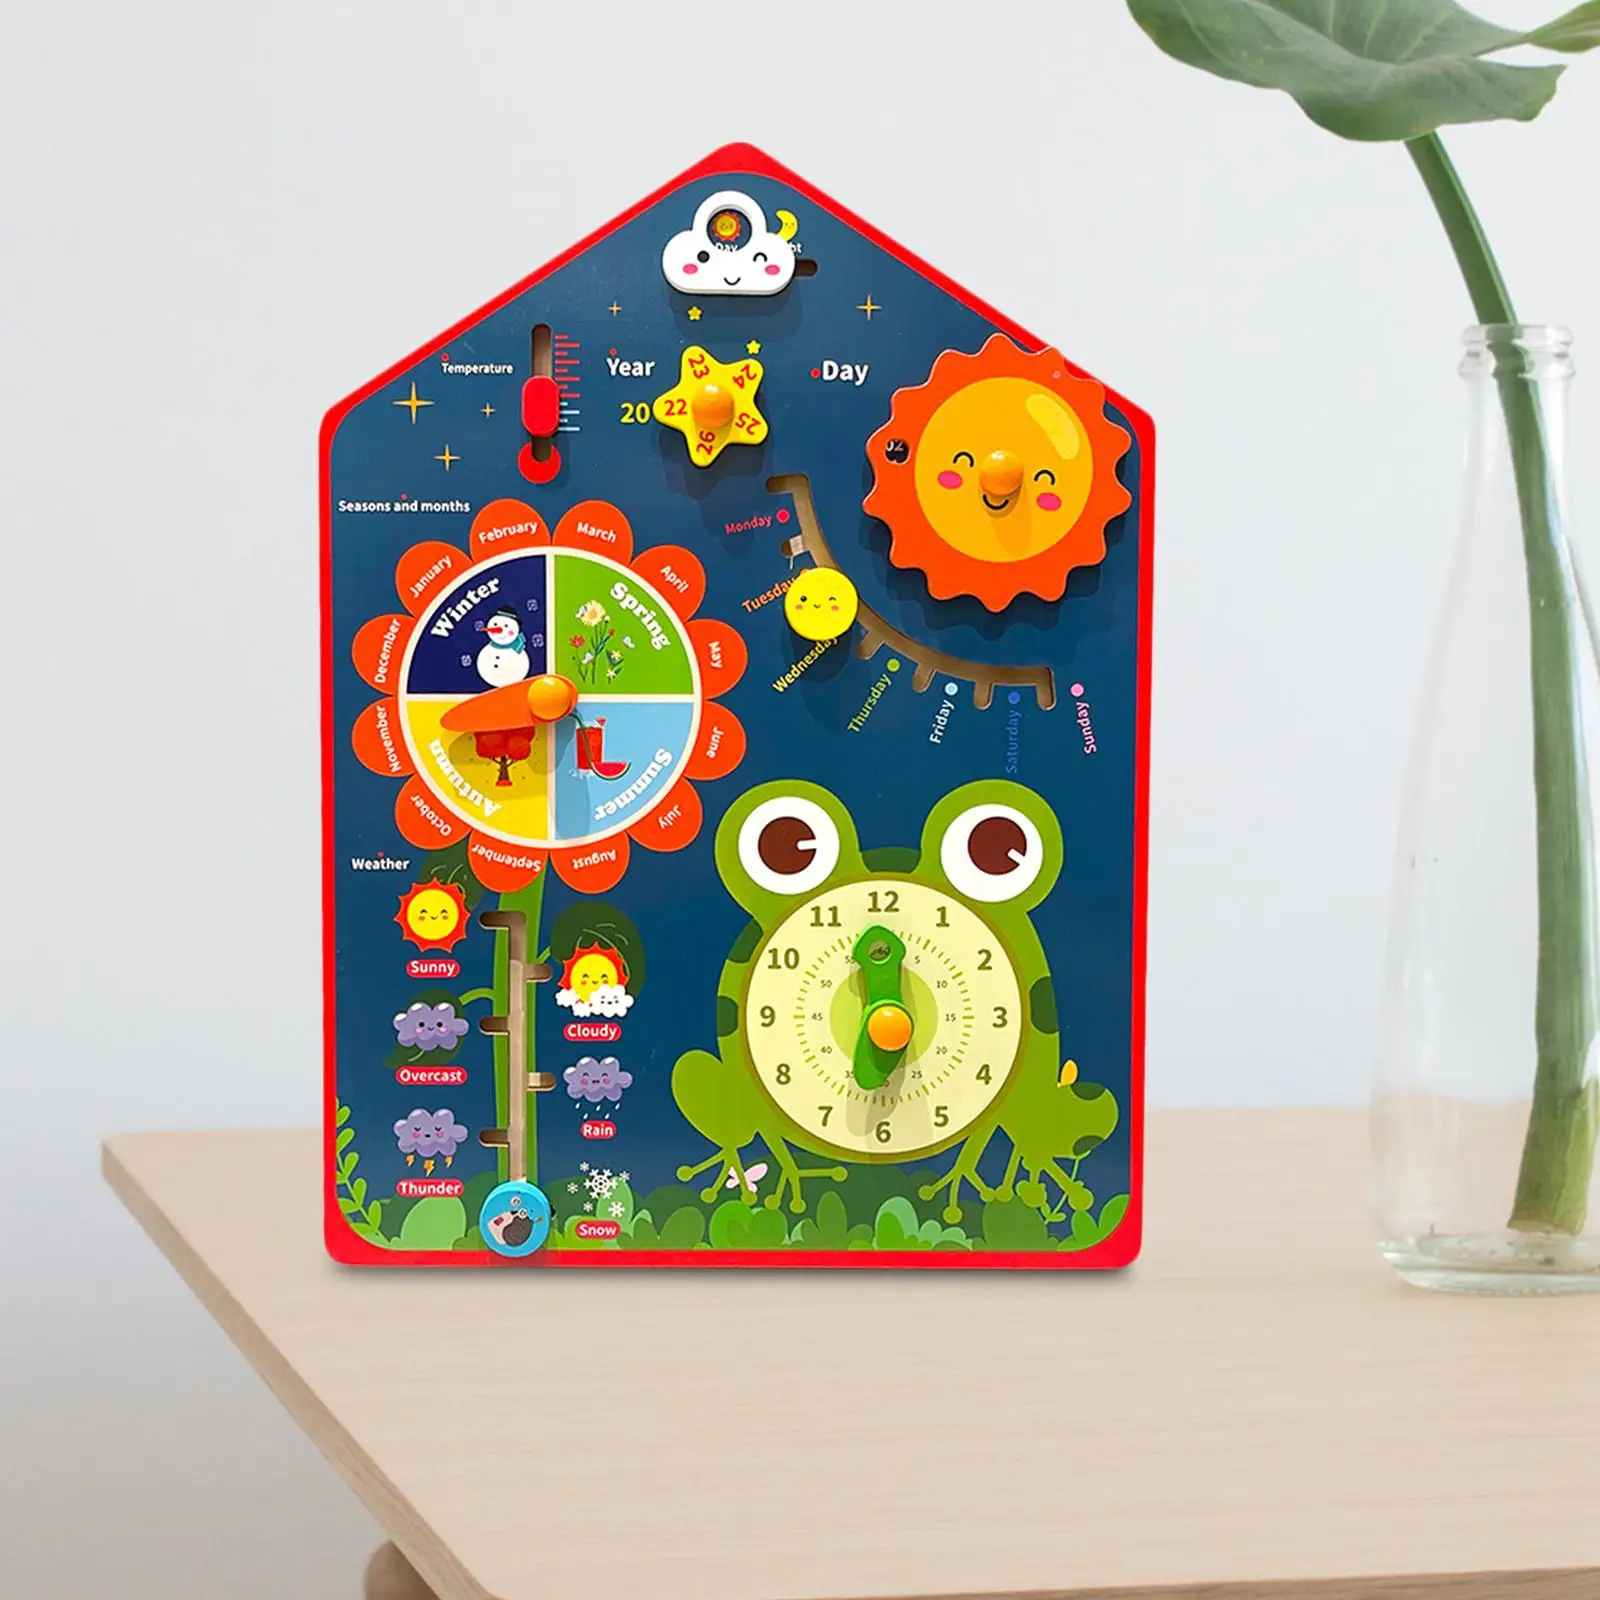 Montessori Wooden Calendar Clock Learning Educational Toy for Children